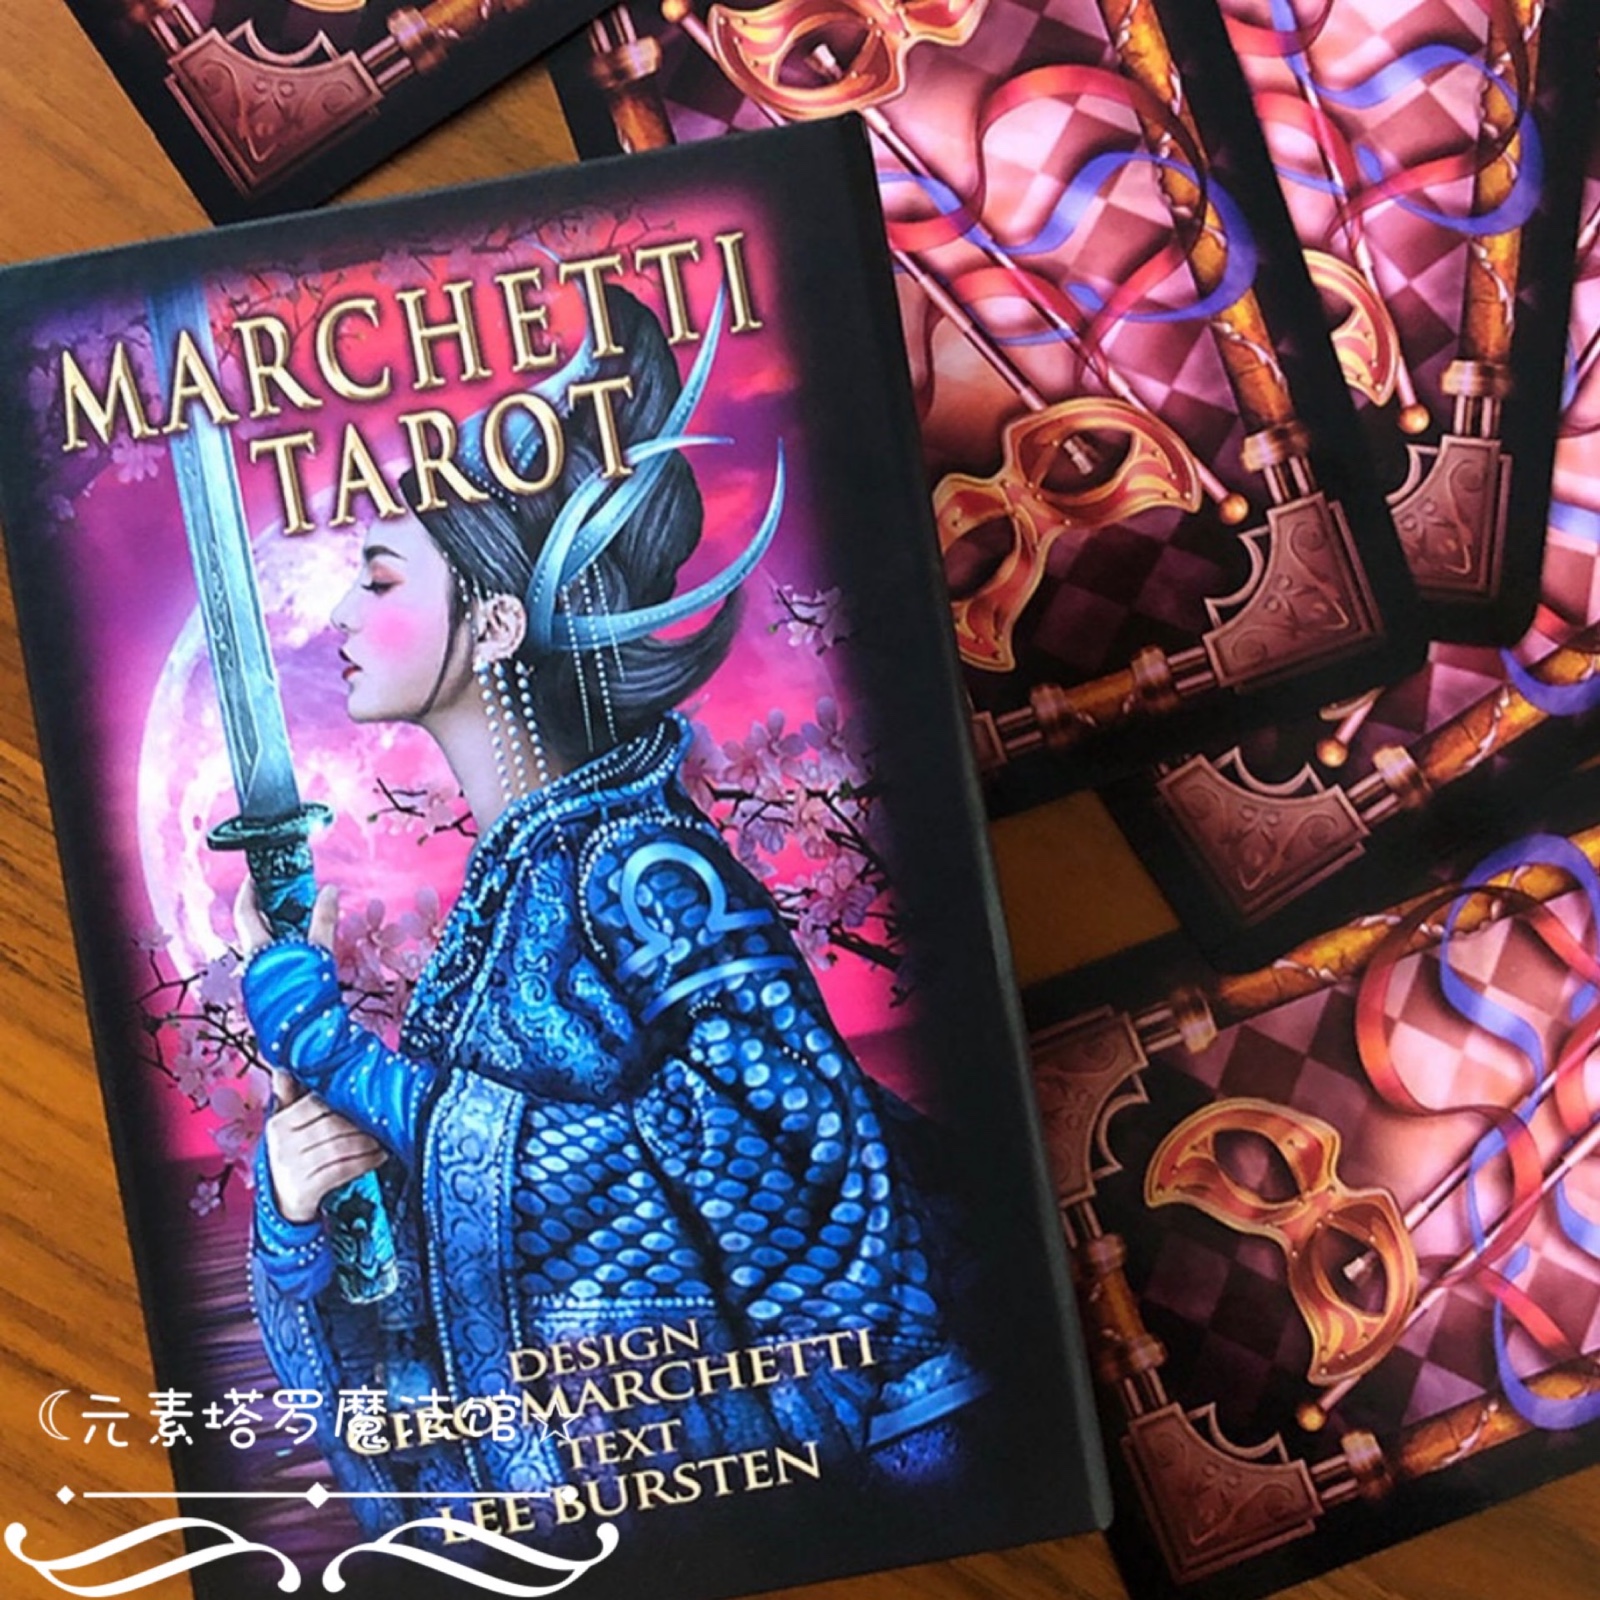 Marchetti Tarot 카드 서명 버전을 가져 오기